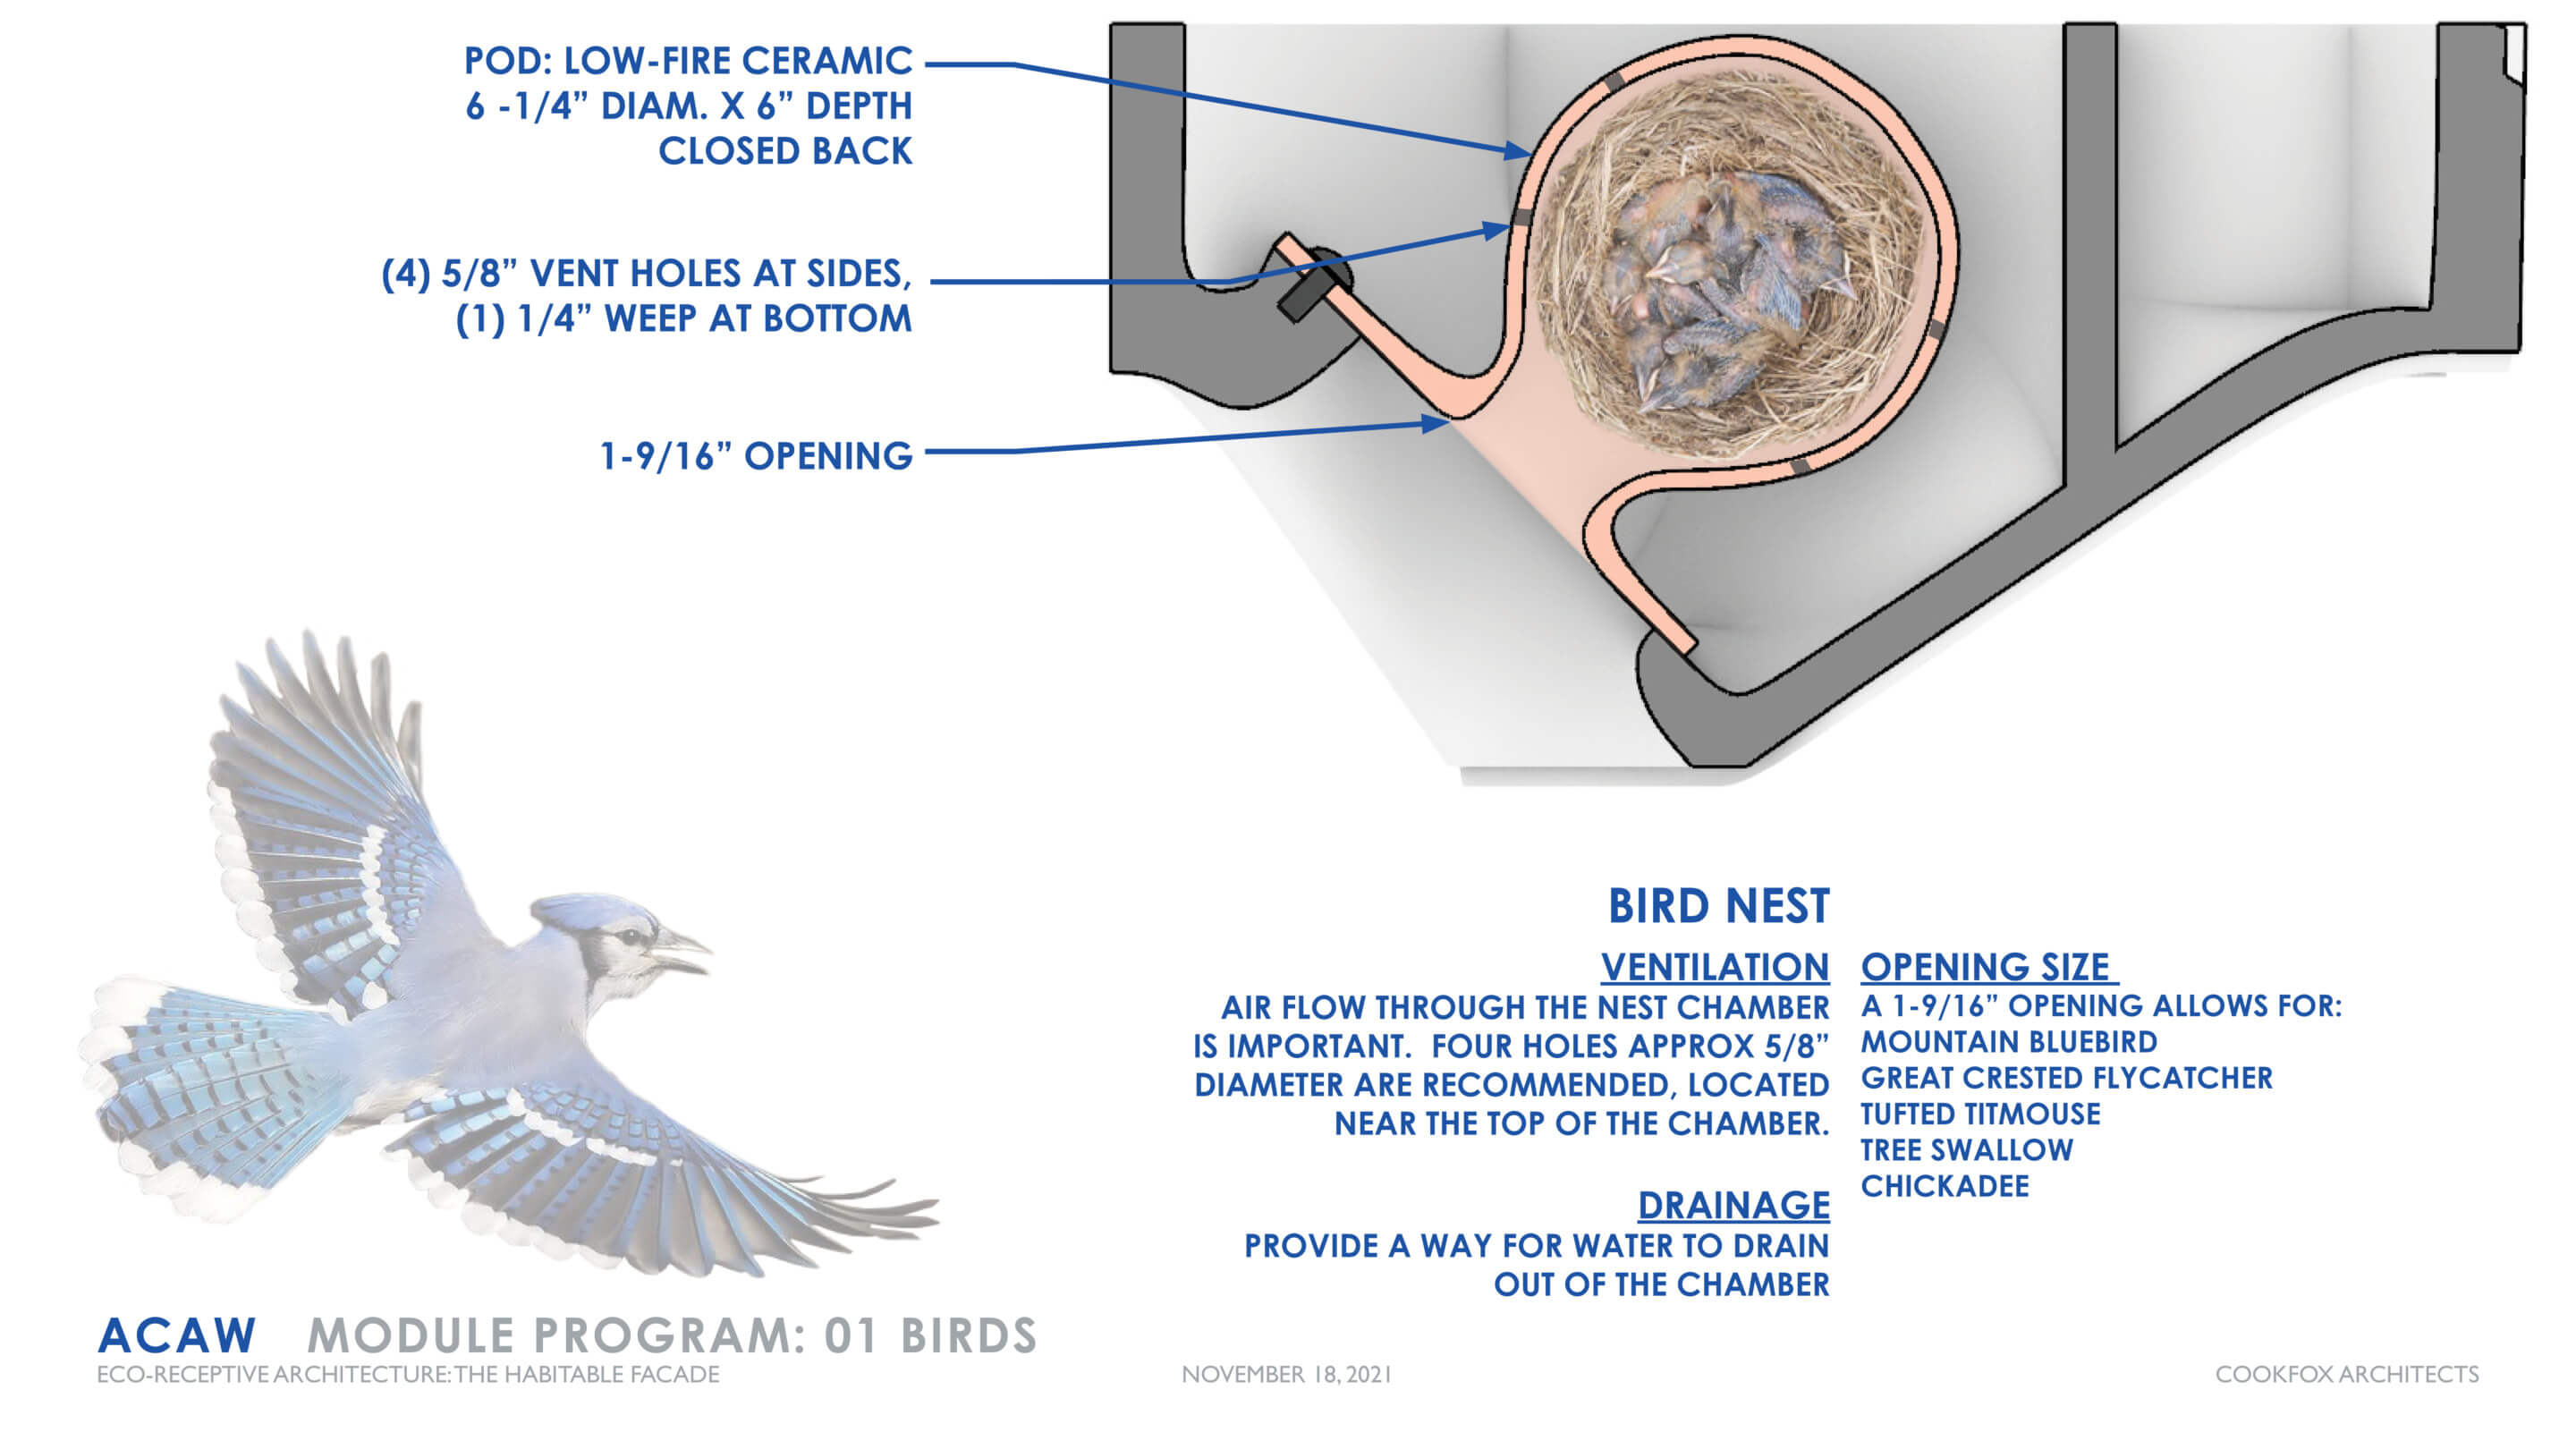 Diagram of a pod for bird nesting